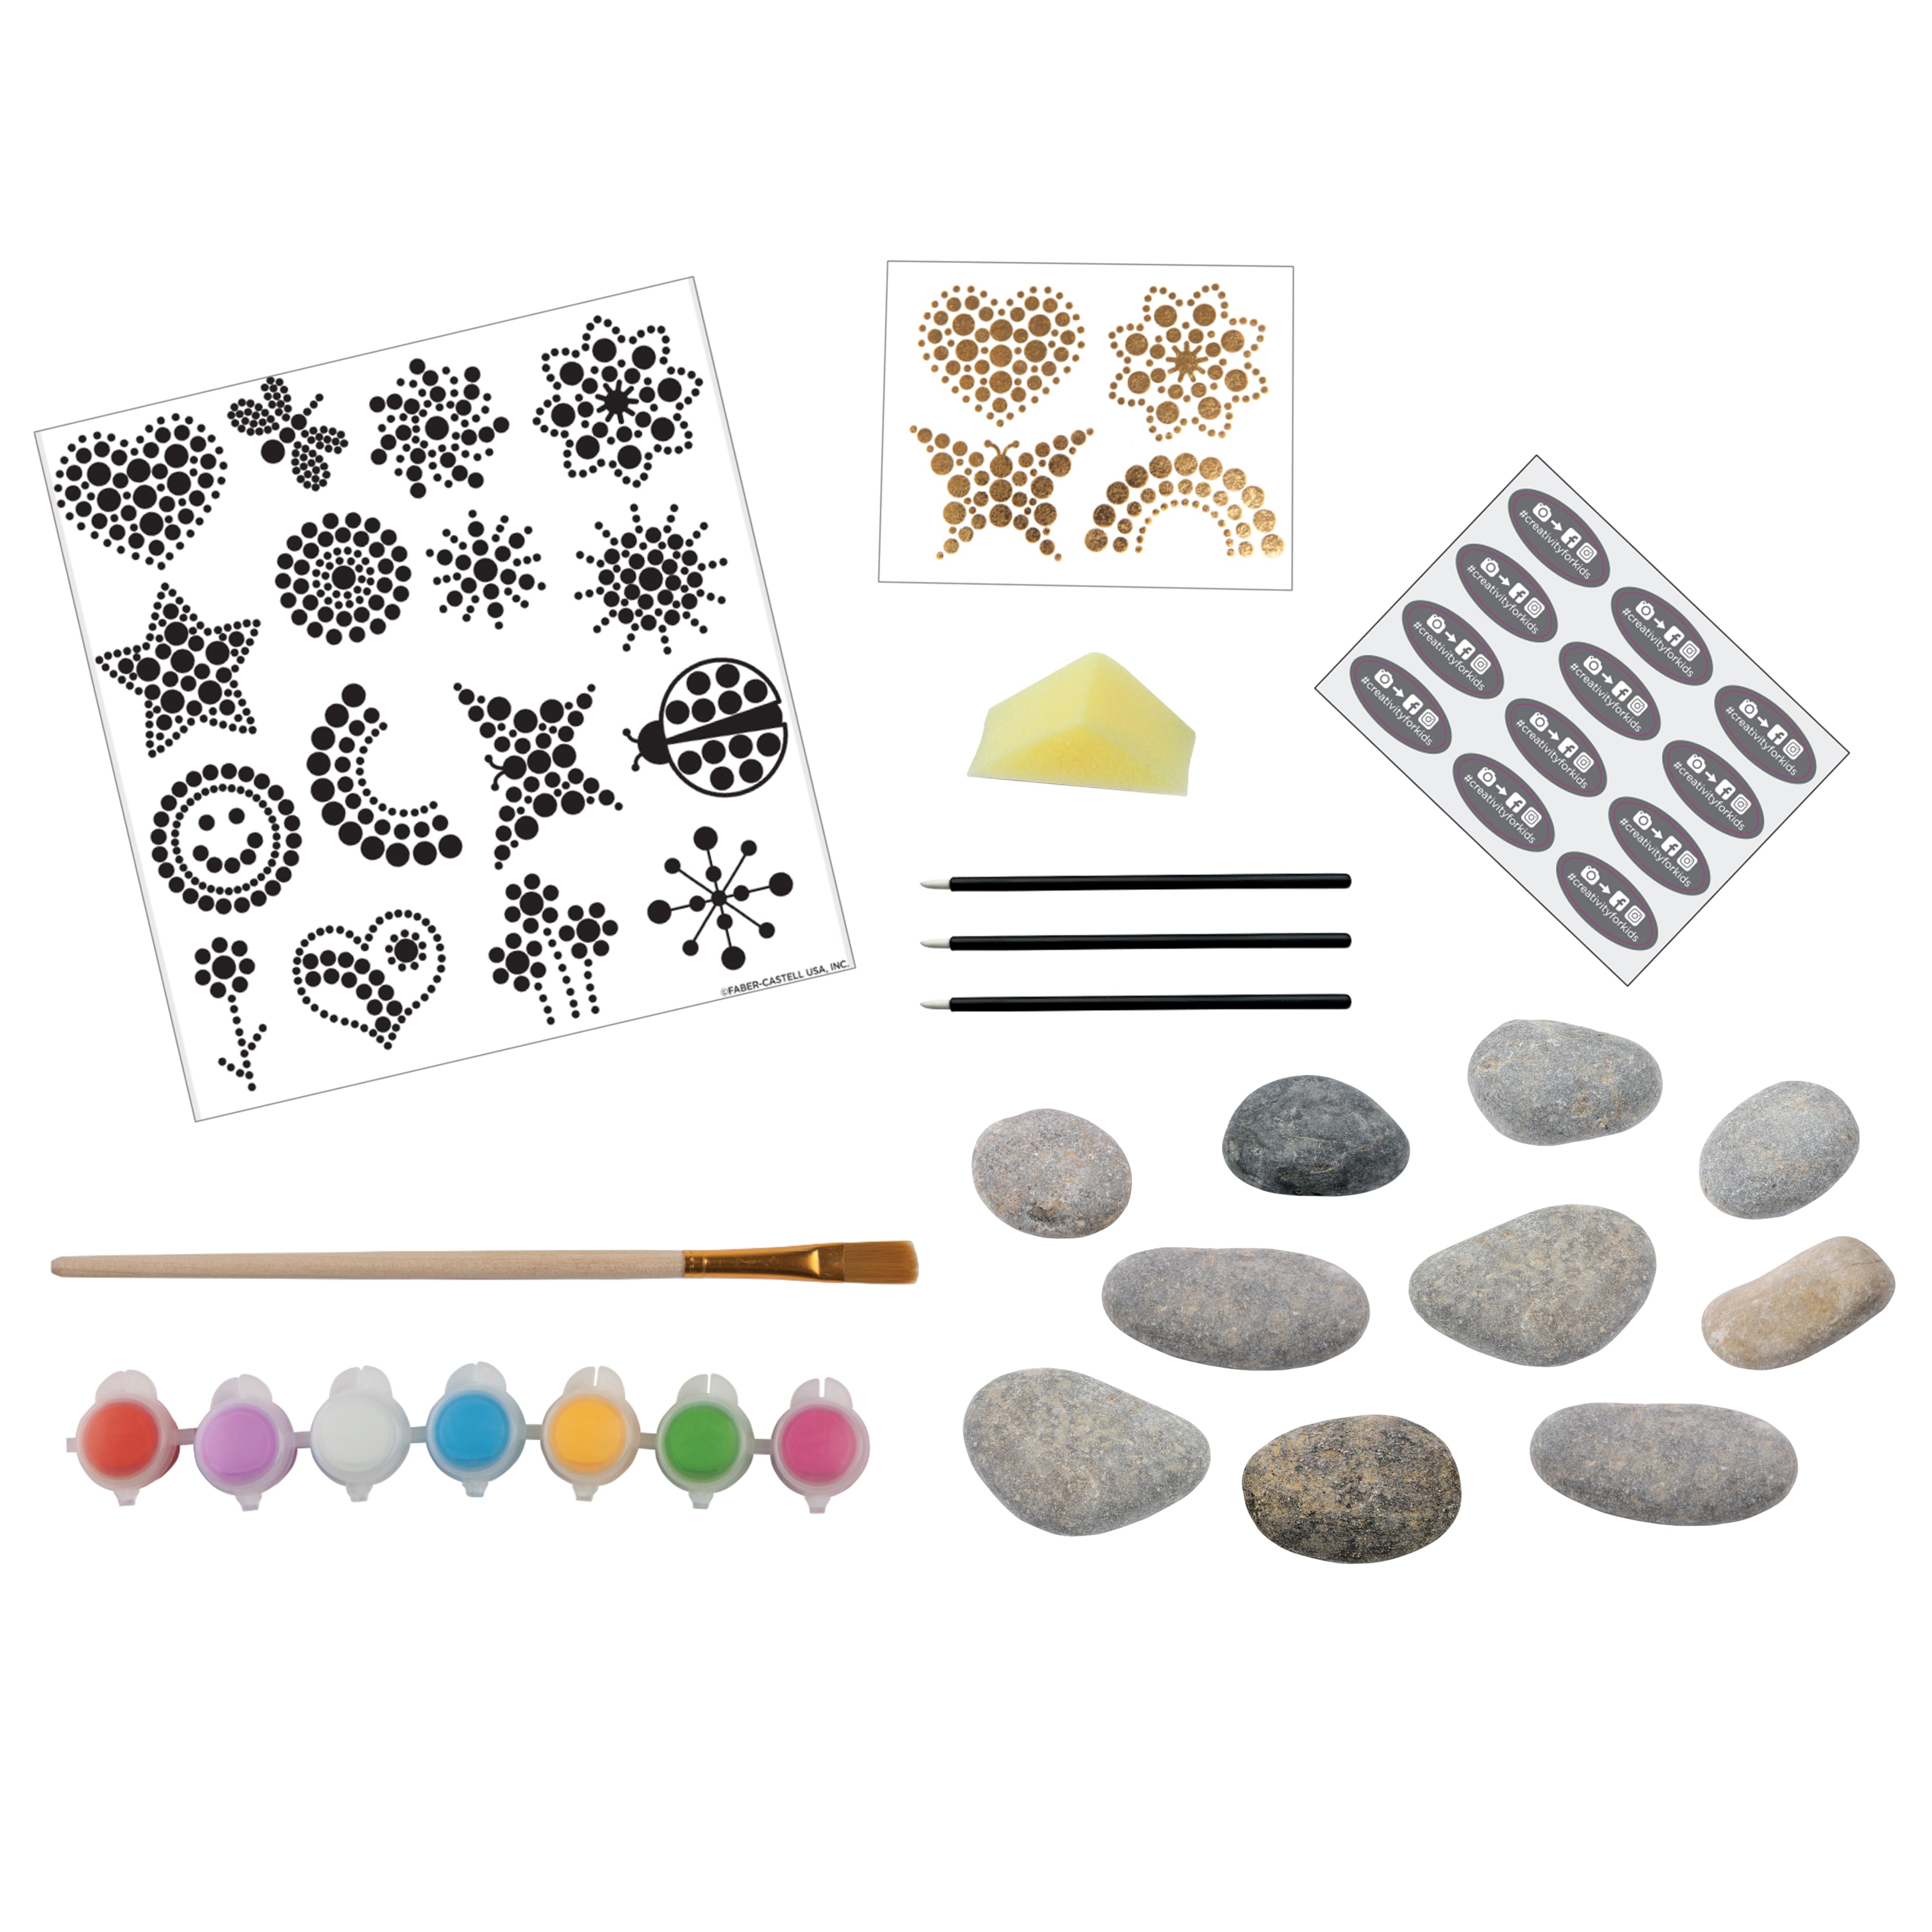 Creativity for Kids&#xAE; Mandala Dot-a-Rock Painting Kit